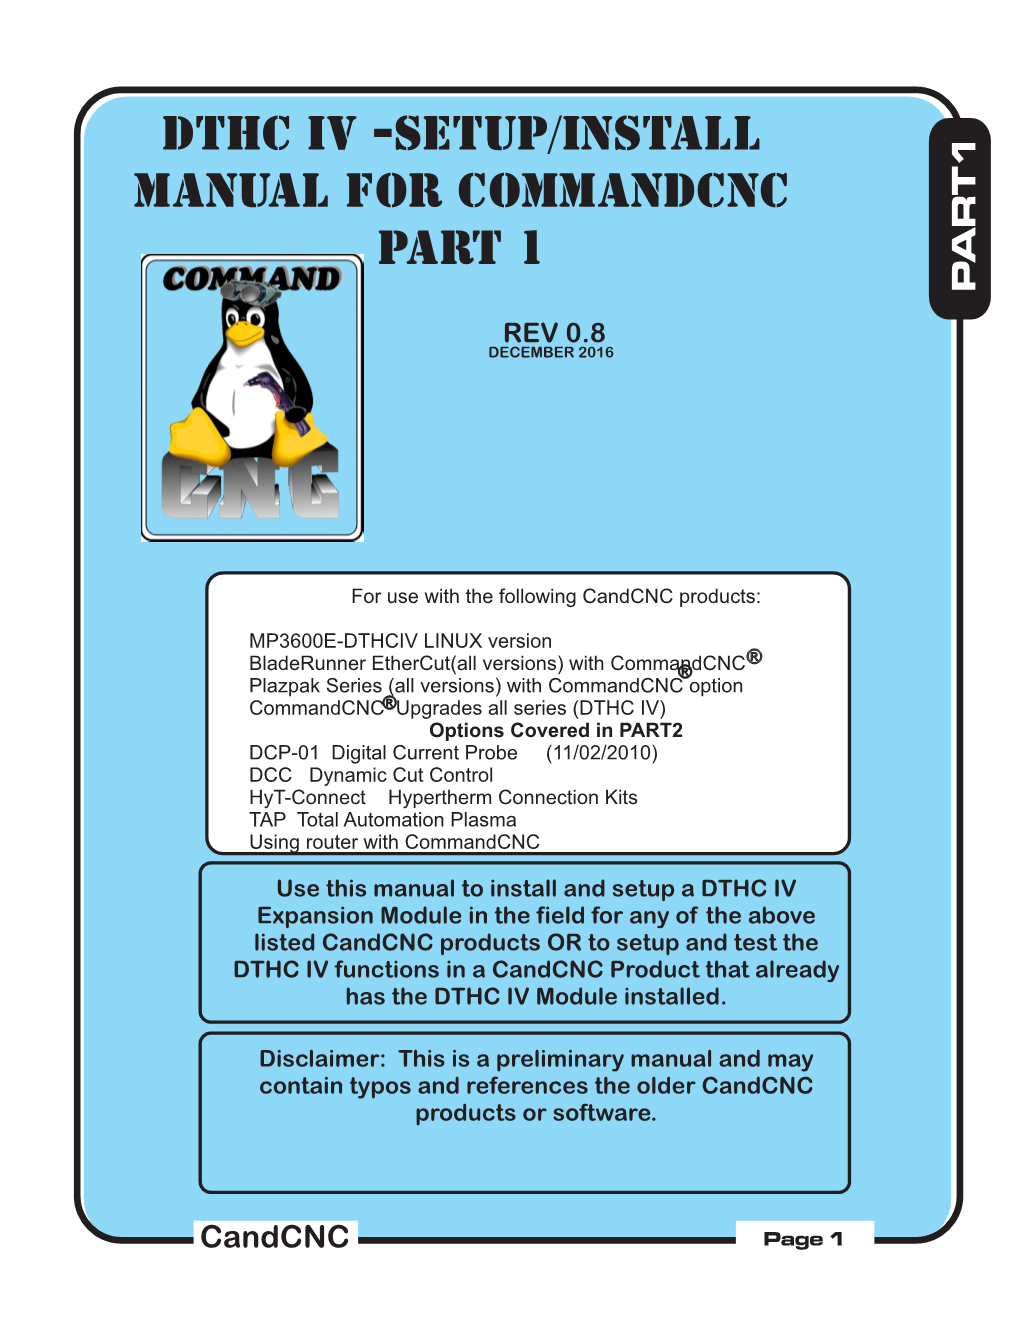 DTHC IV -SETUP/INSTALL MANUAL for Commandcnc PART 1